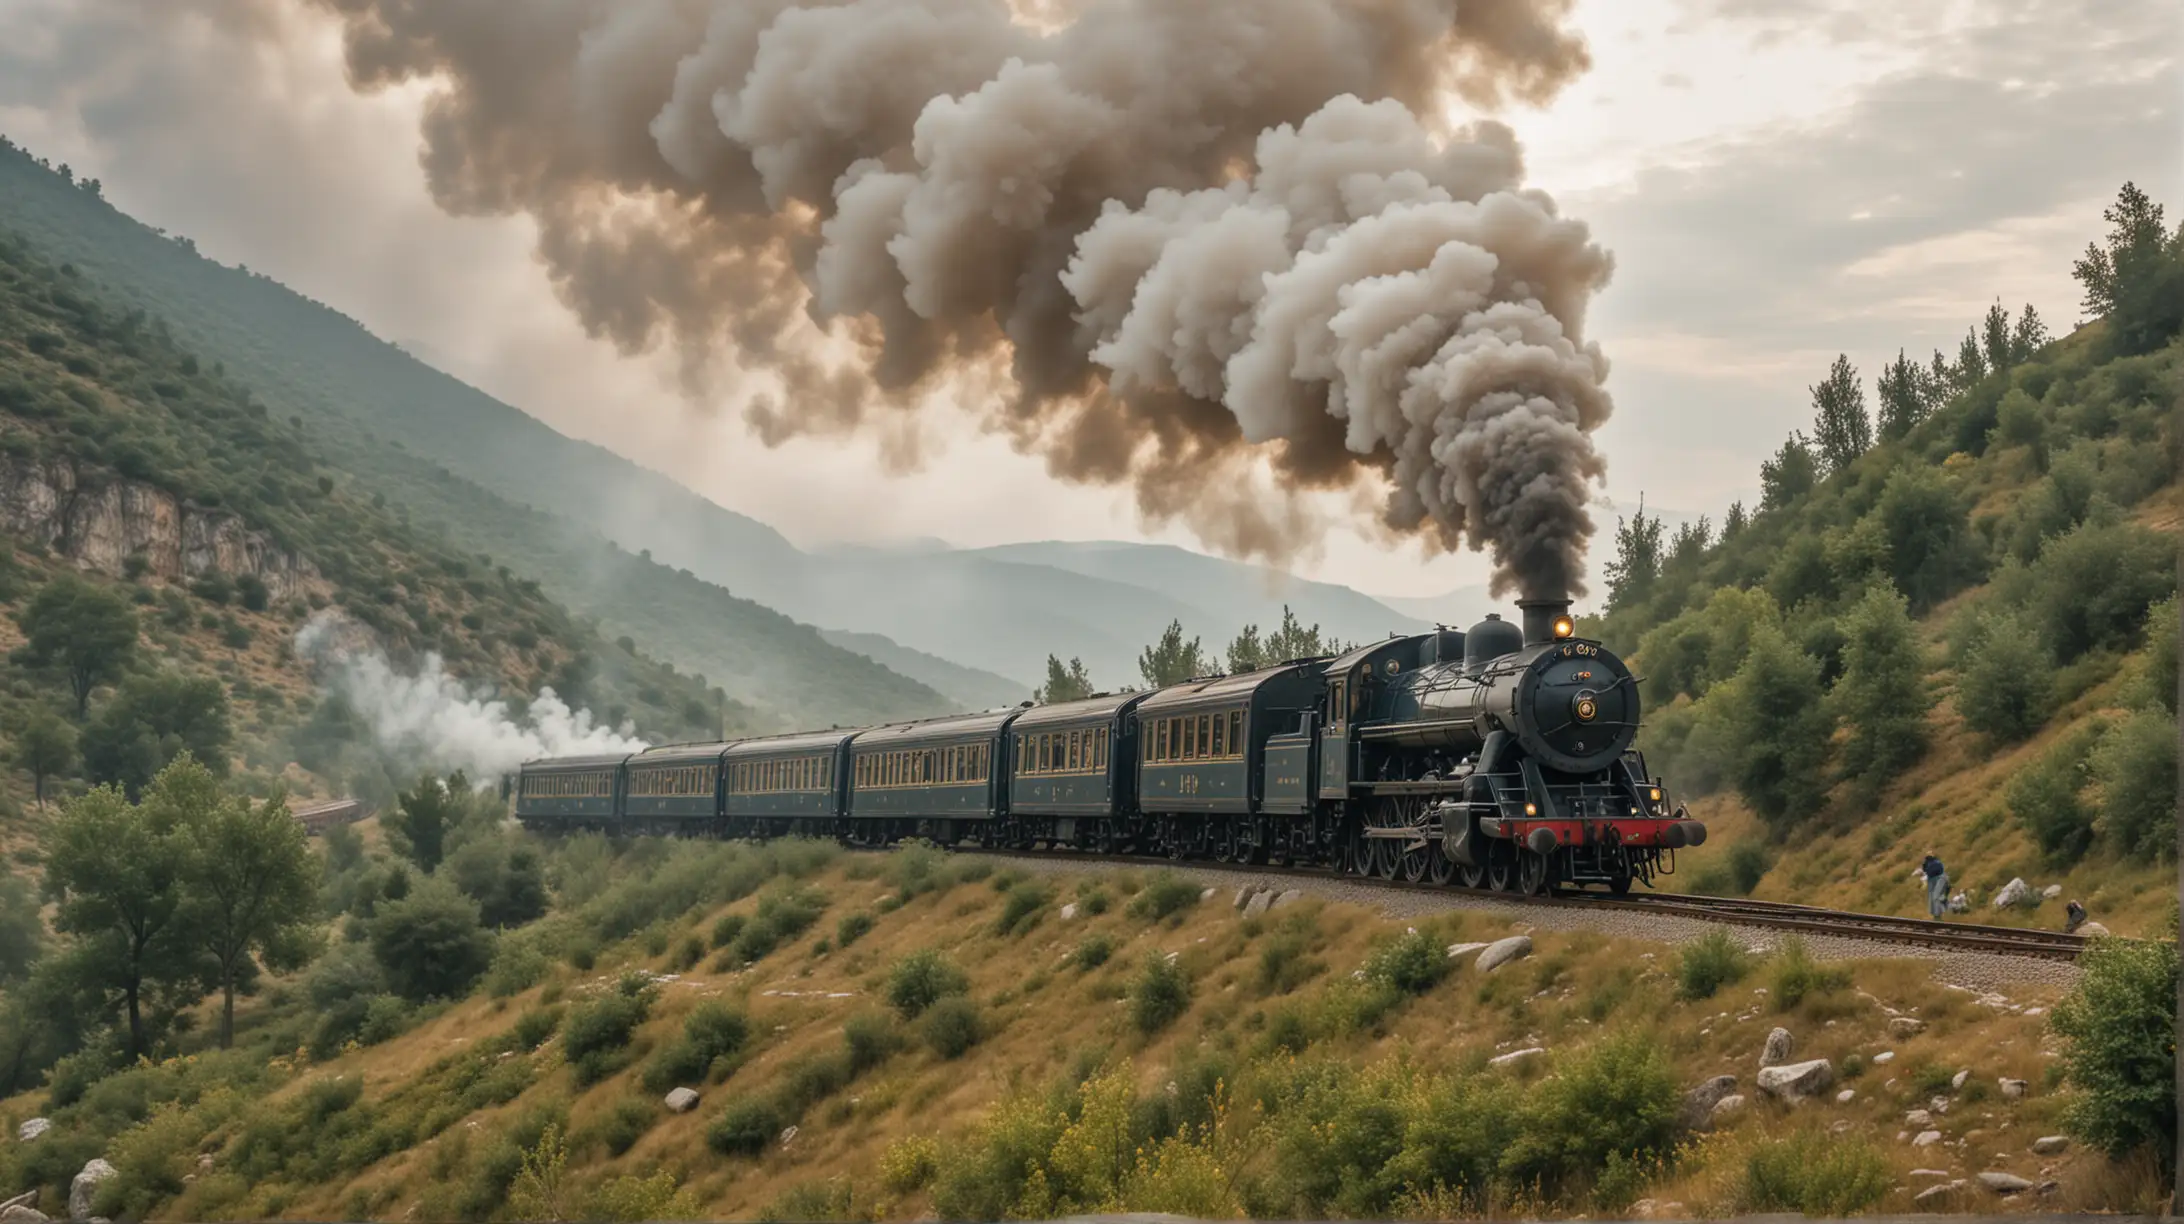 Vintage Orient Express Train Journey through Turkish Wilderness with Clouds and Steam